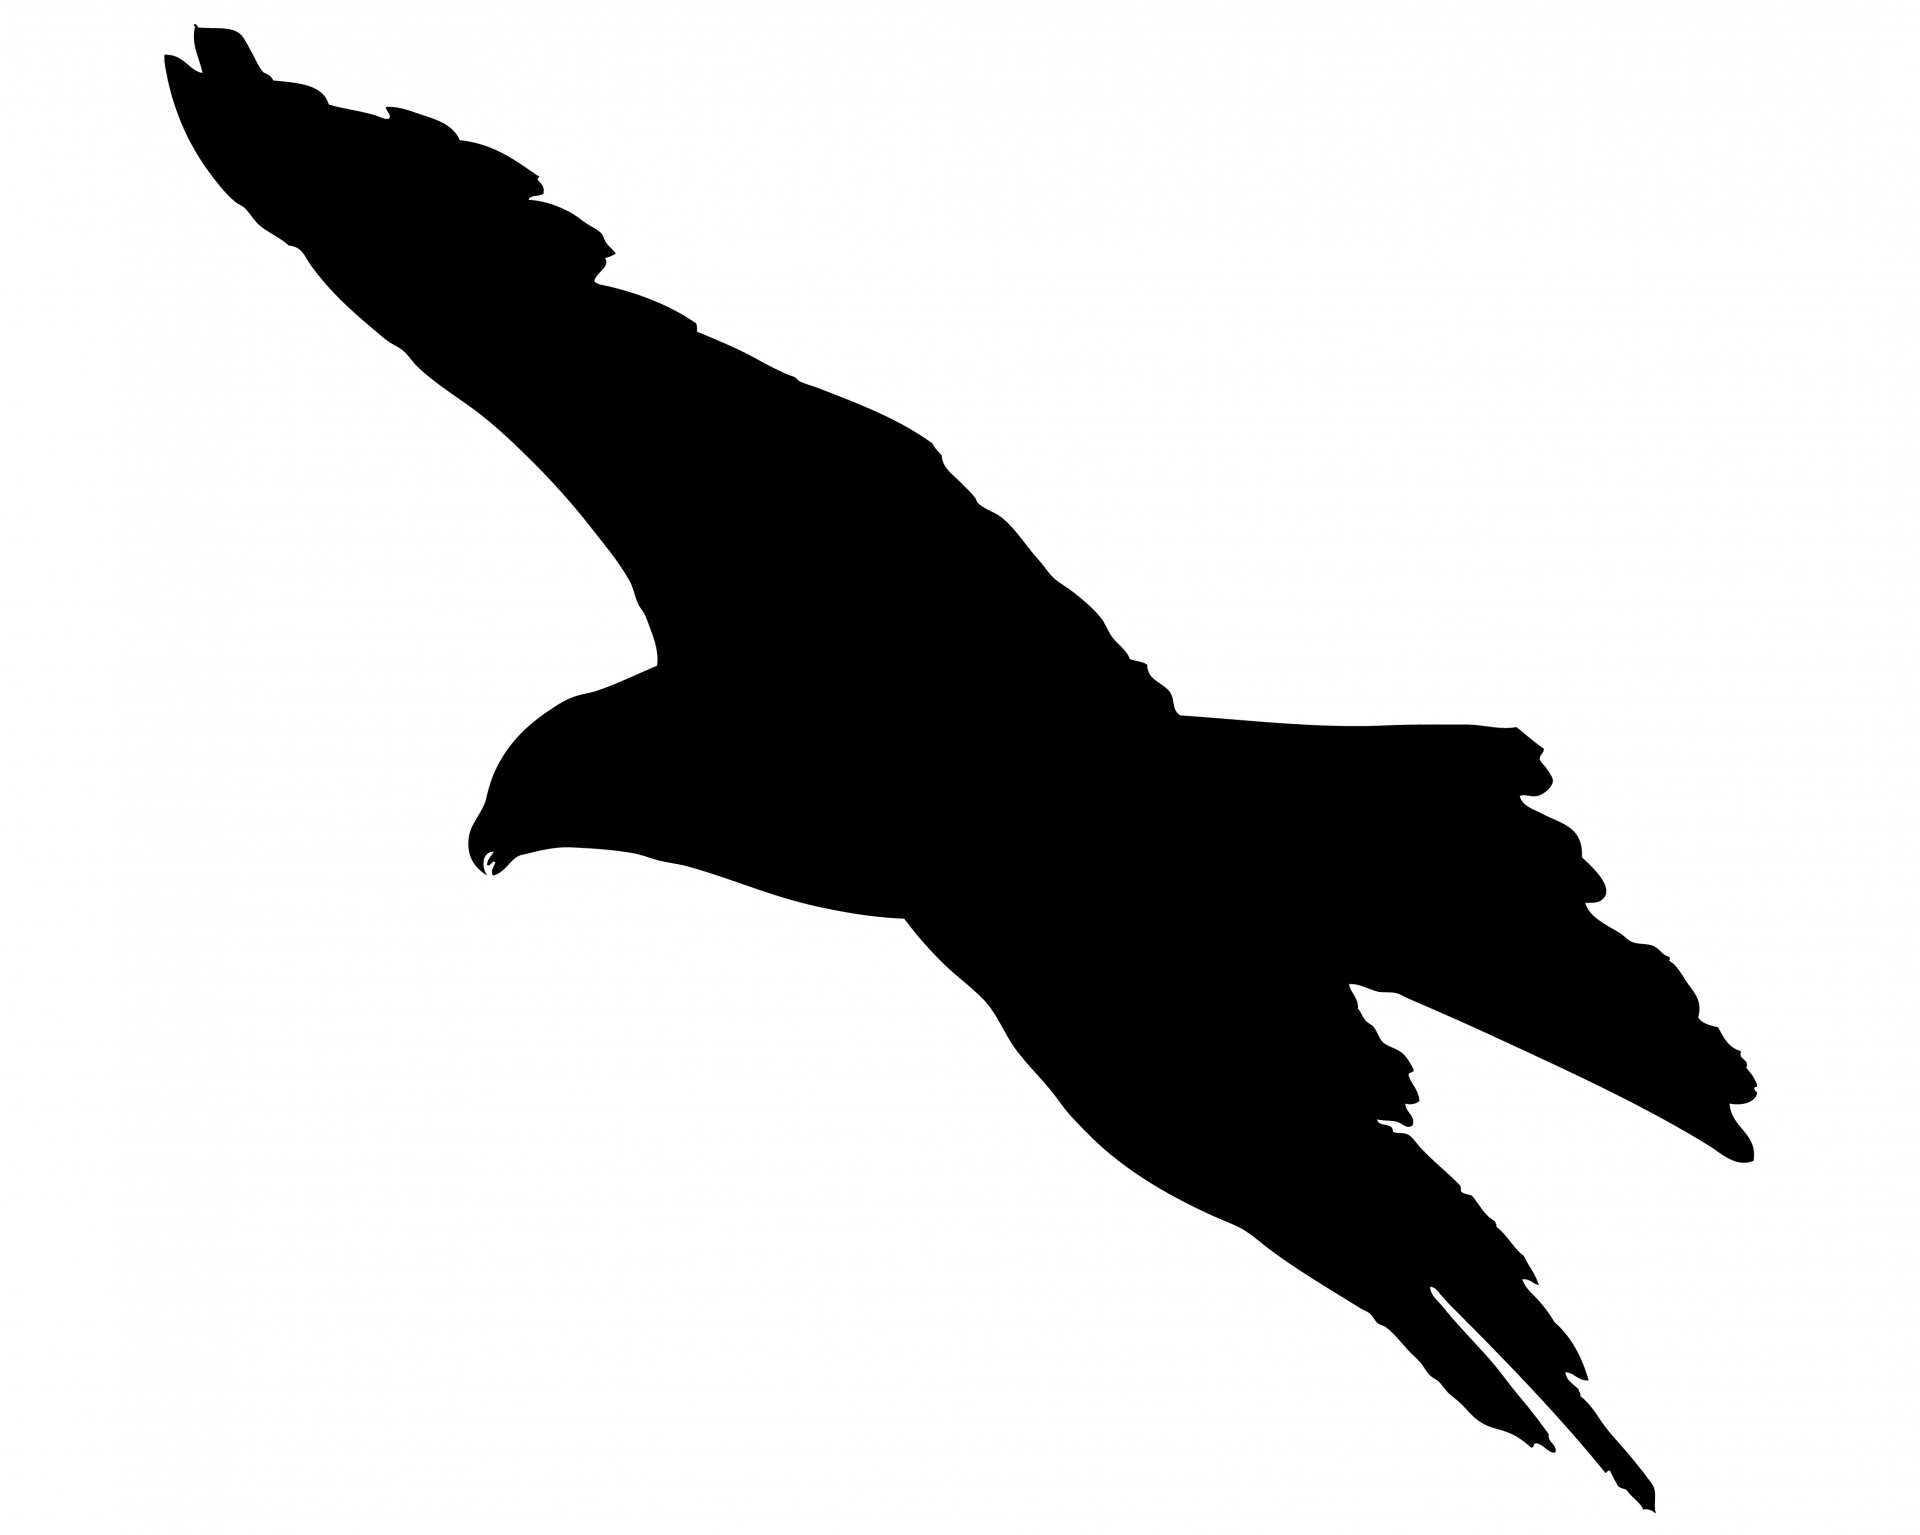 Bird of prey flying black silhouette